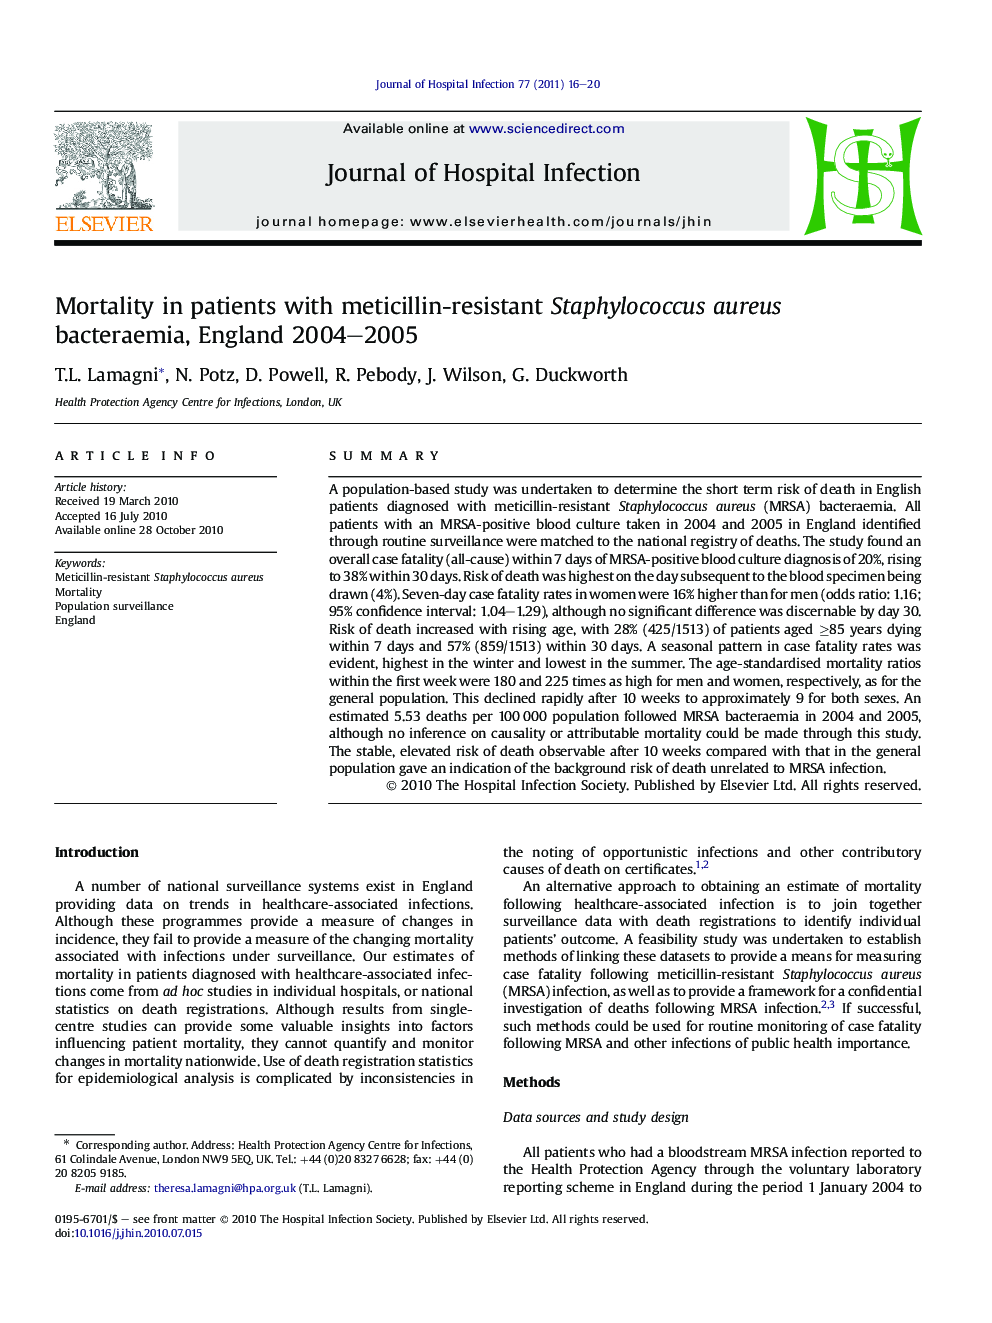 Mortality in patients with meticillin-resistant Staphylococcus aureus bacteraemia, England 2004–2005